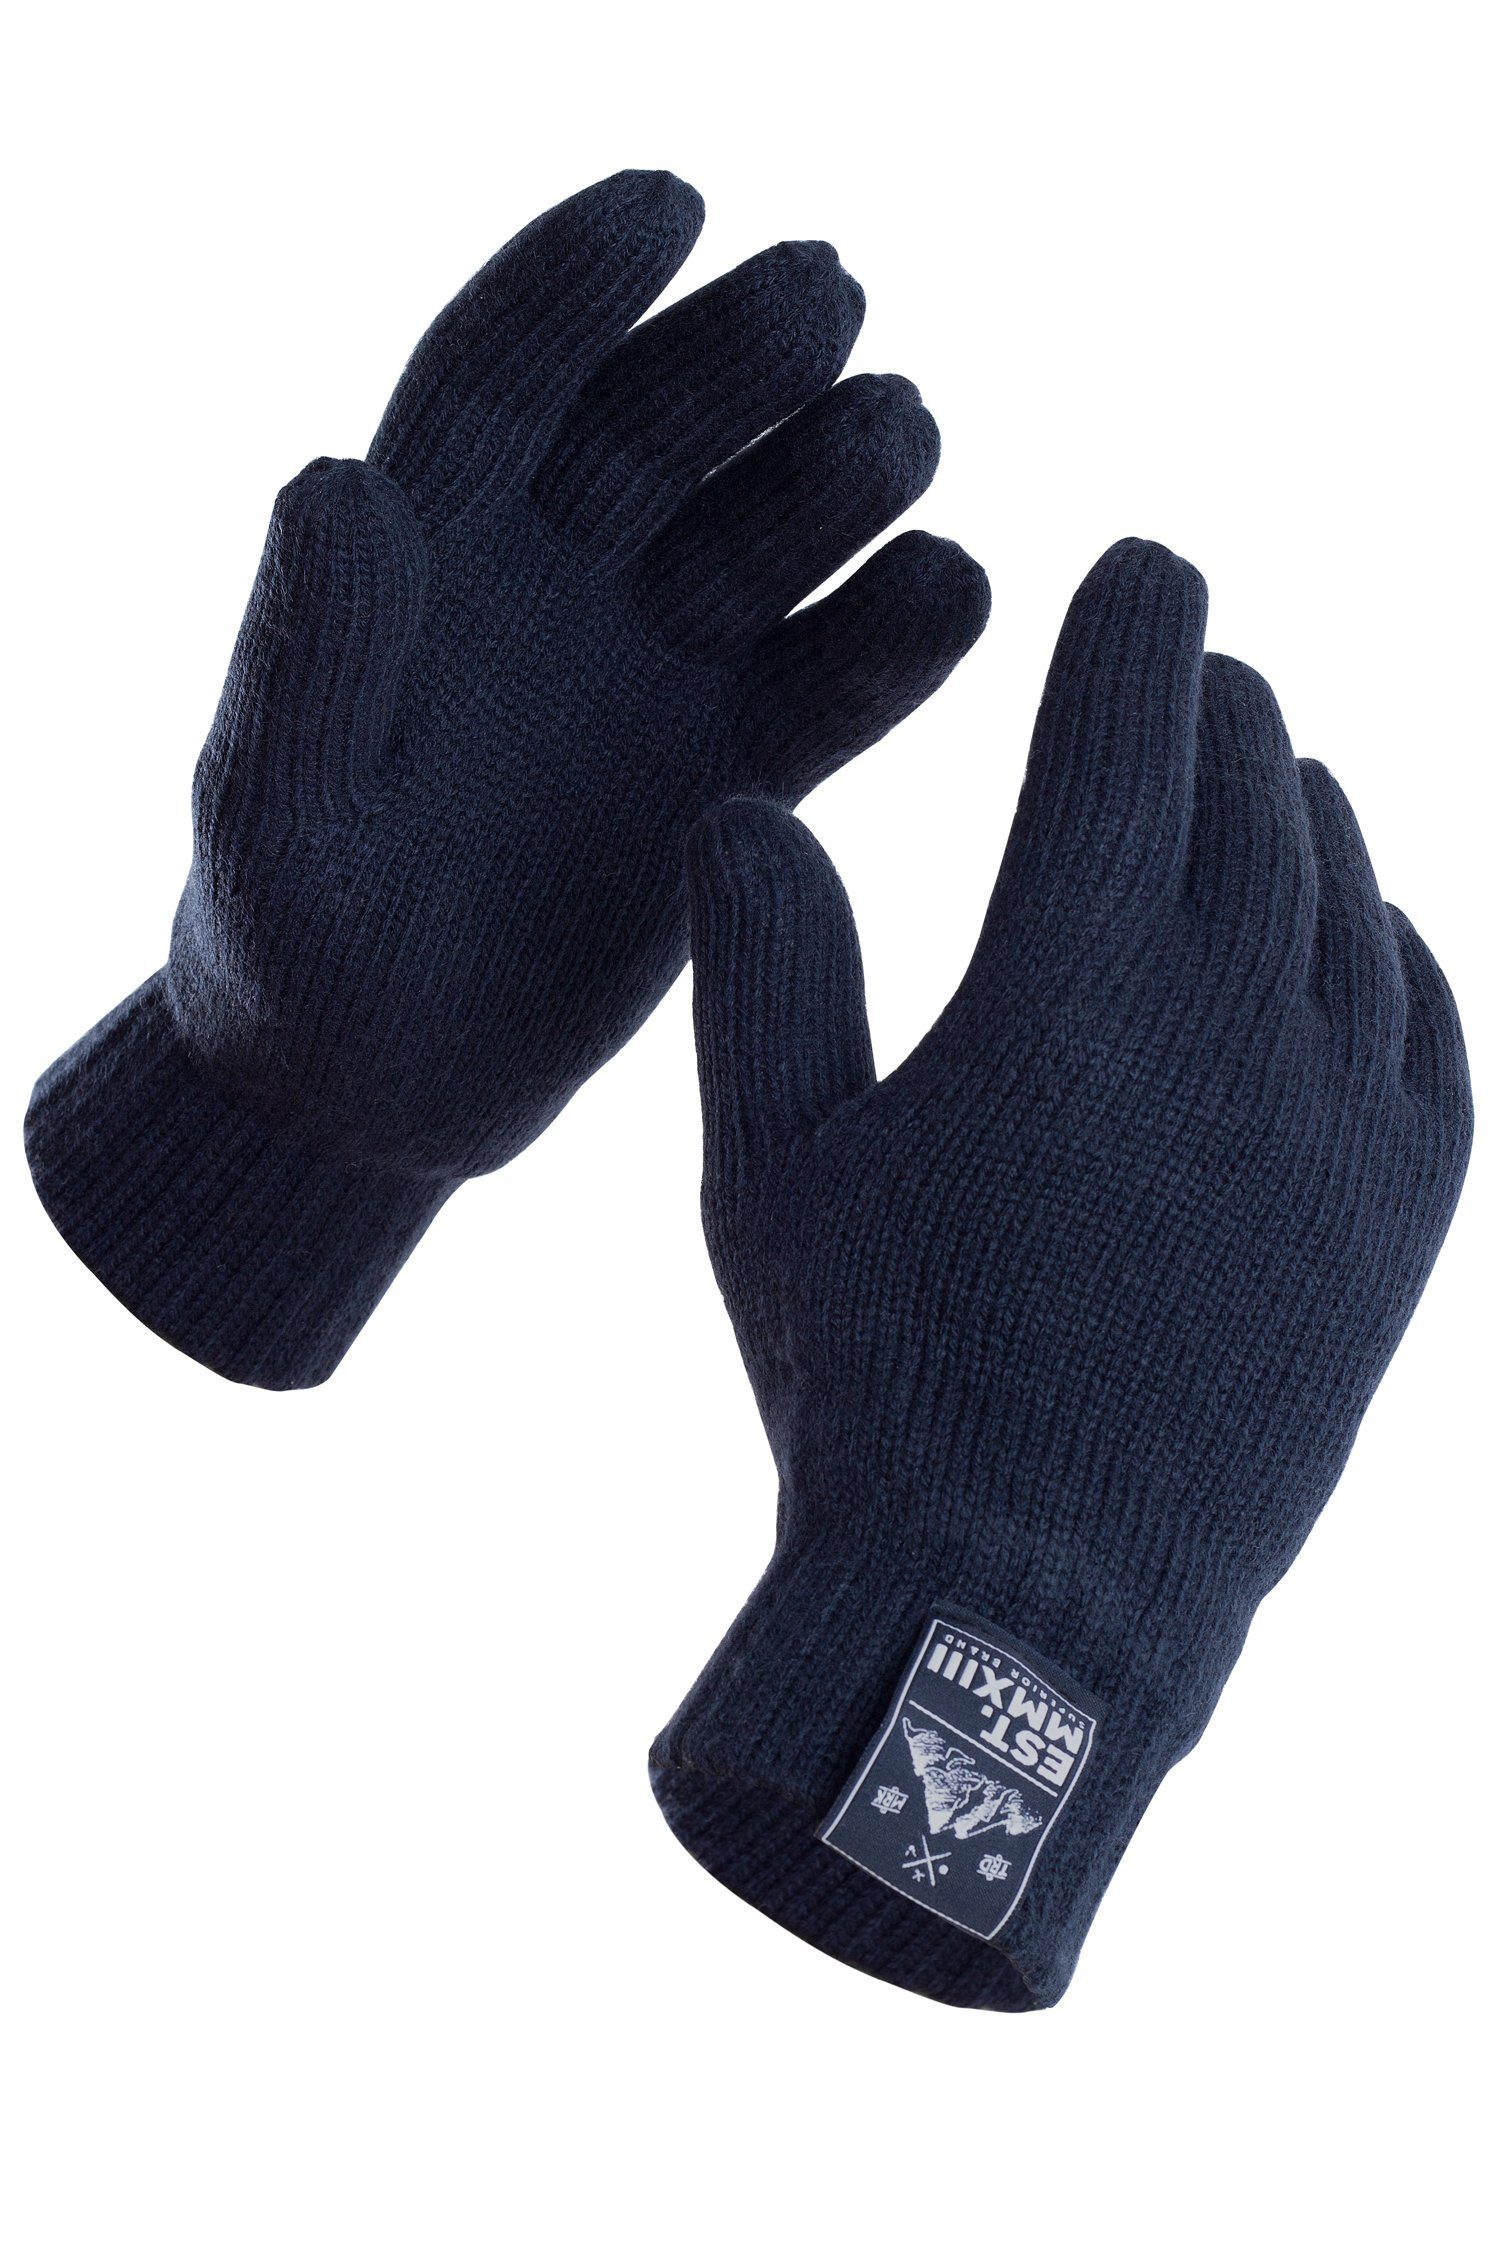 Manufaktur13 Baumwollhandschuhe Rough Gloves - Handschuhe/ Vollfingerhanschuhe